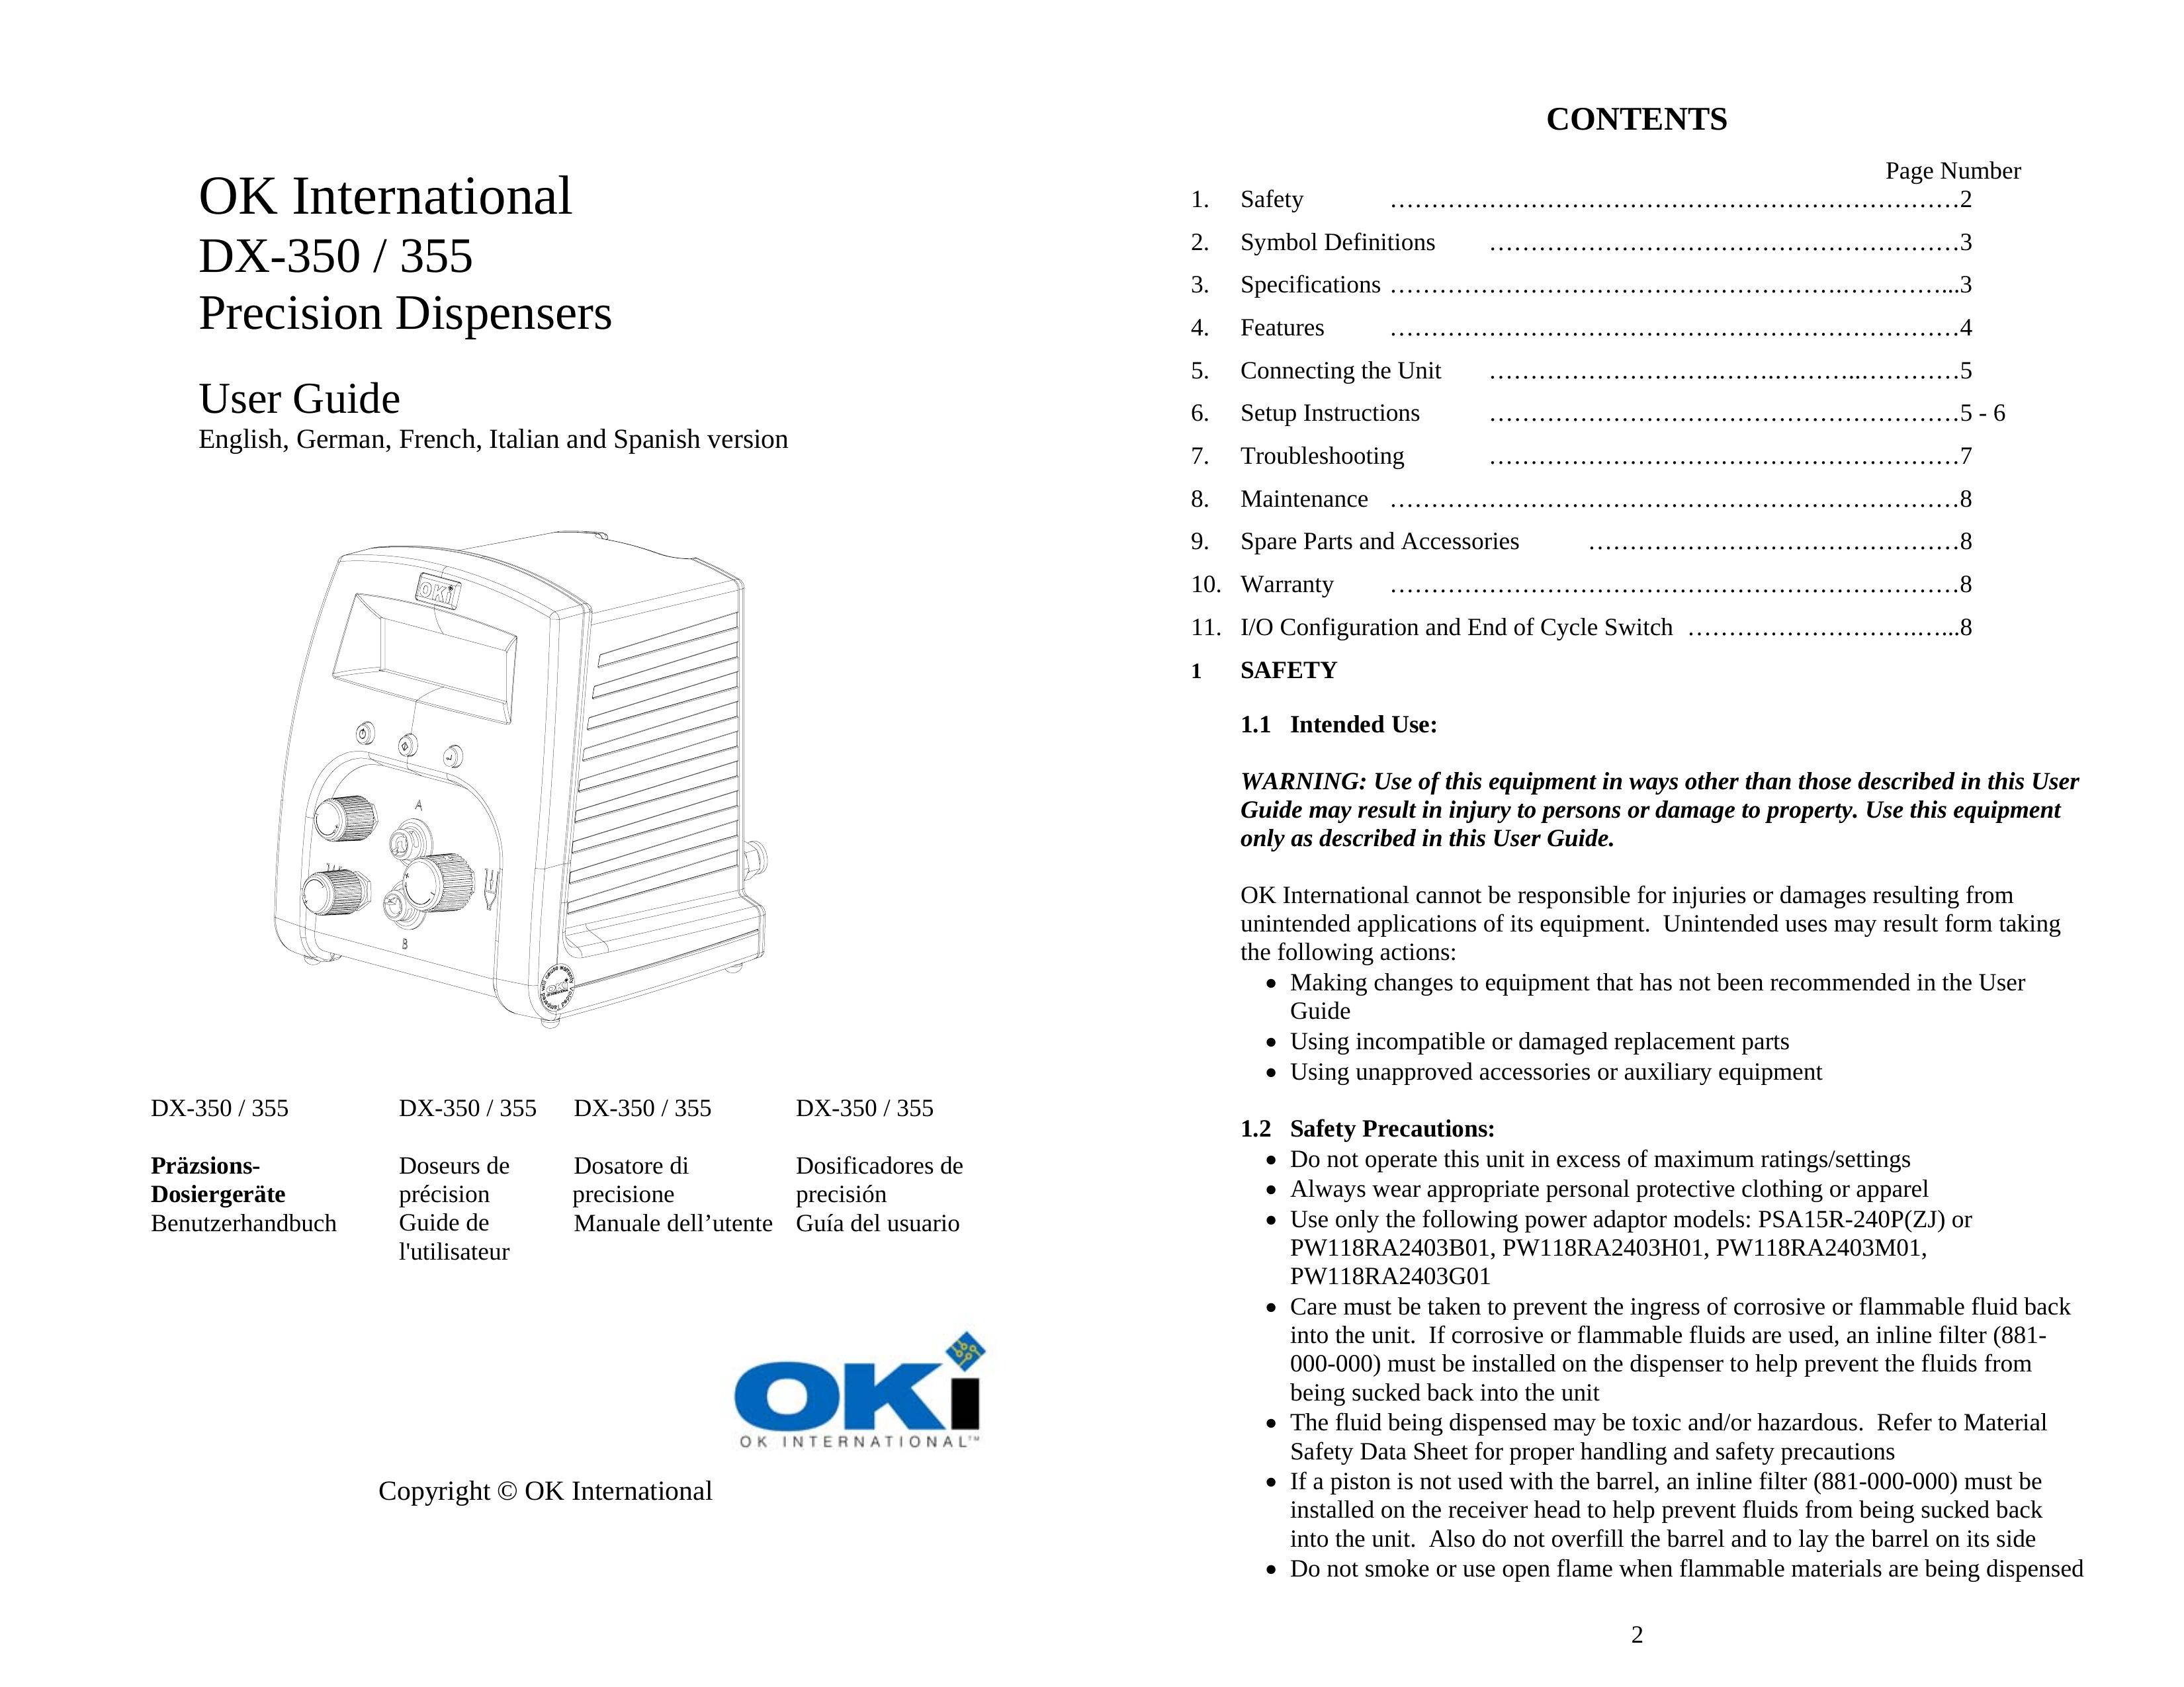 OK International DX-350 / 355 Water Dispenser User Manual